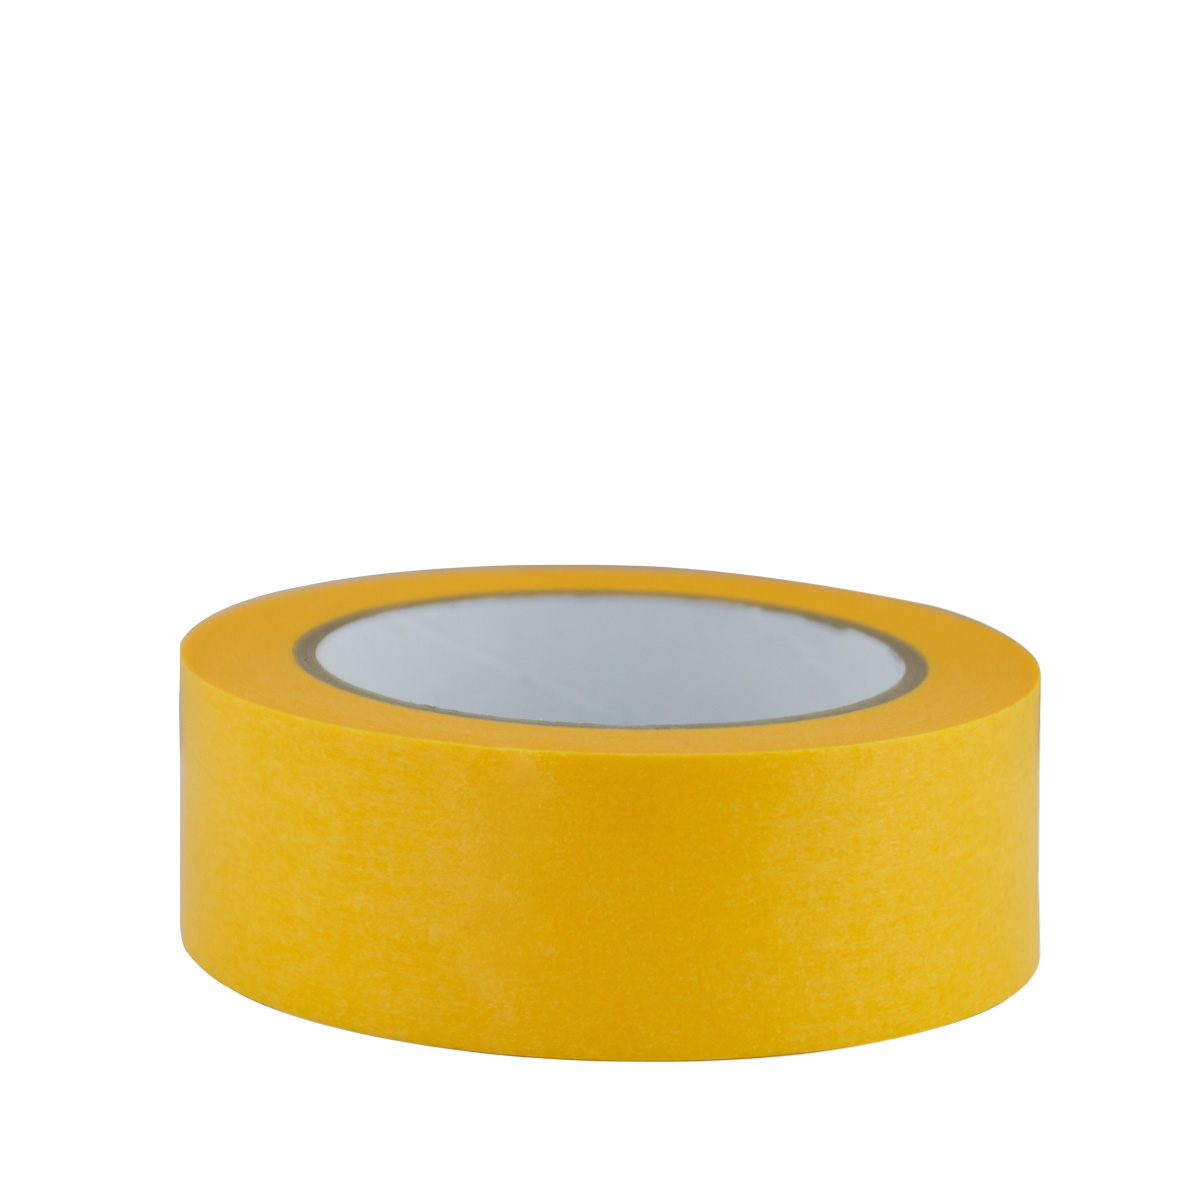 Farbklecks24 Premium Goldband Washi-Tape, 38mmx50m UV90